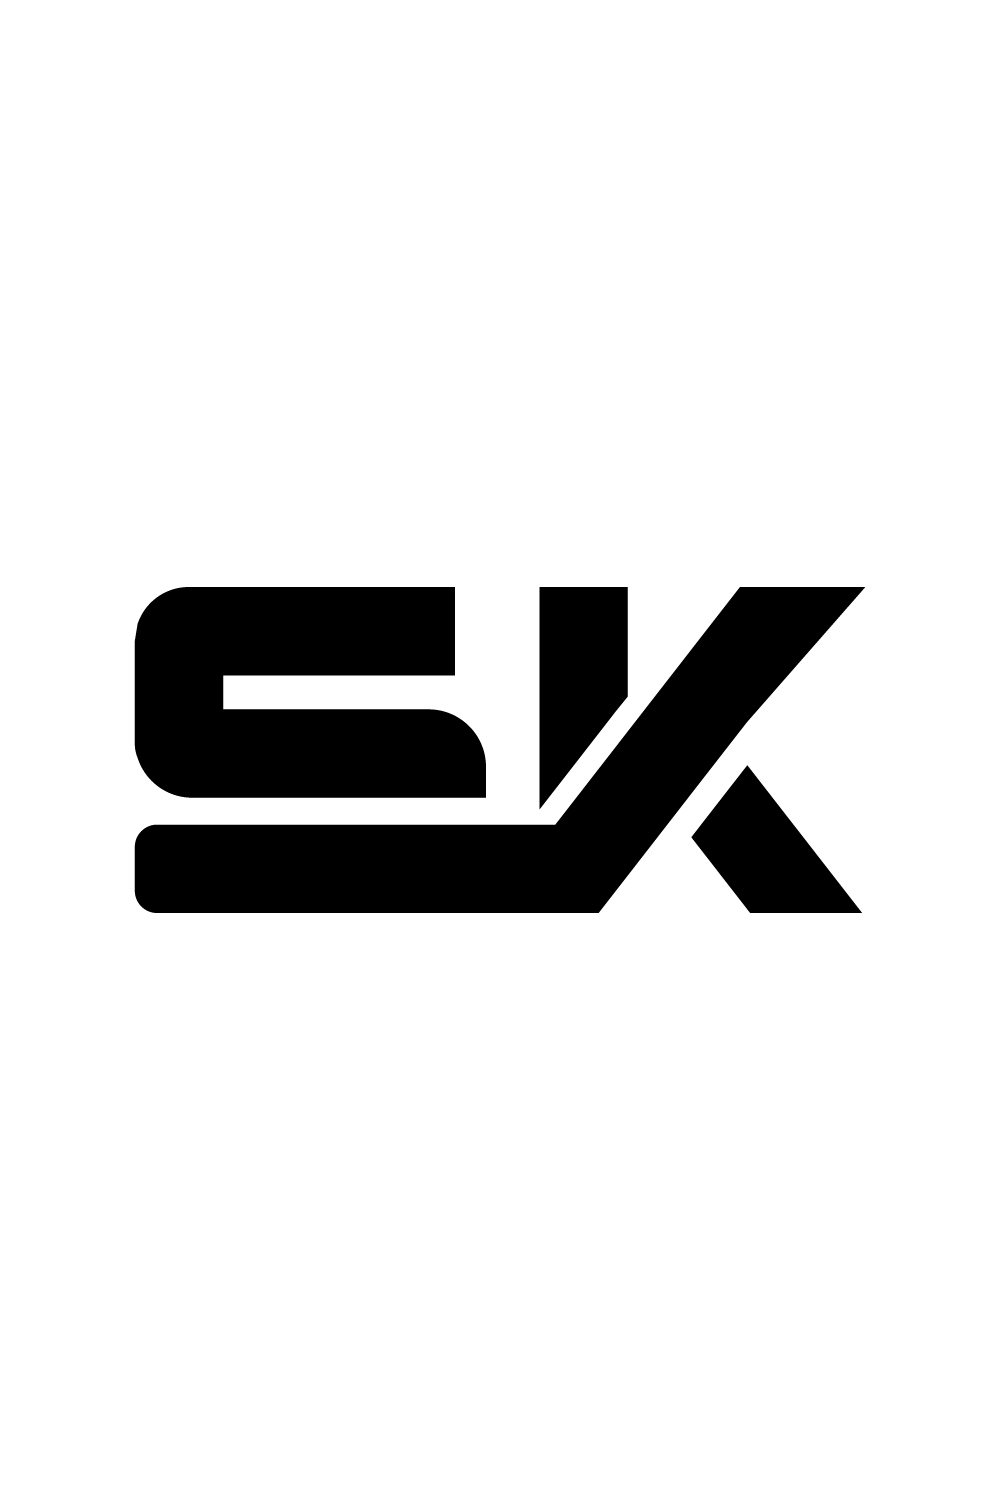 SK Company Name Logo Design || How To Make Professional Logo Design  Pixellab || Sudhir editing 🔥 - YouTube